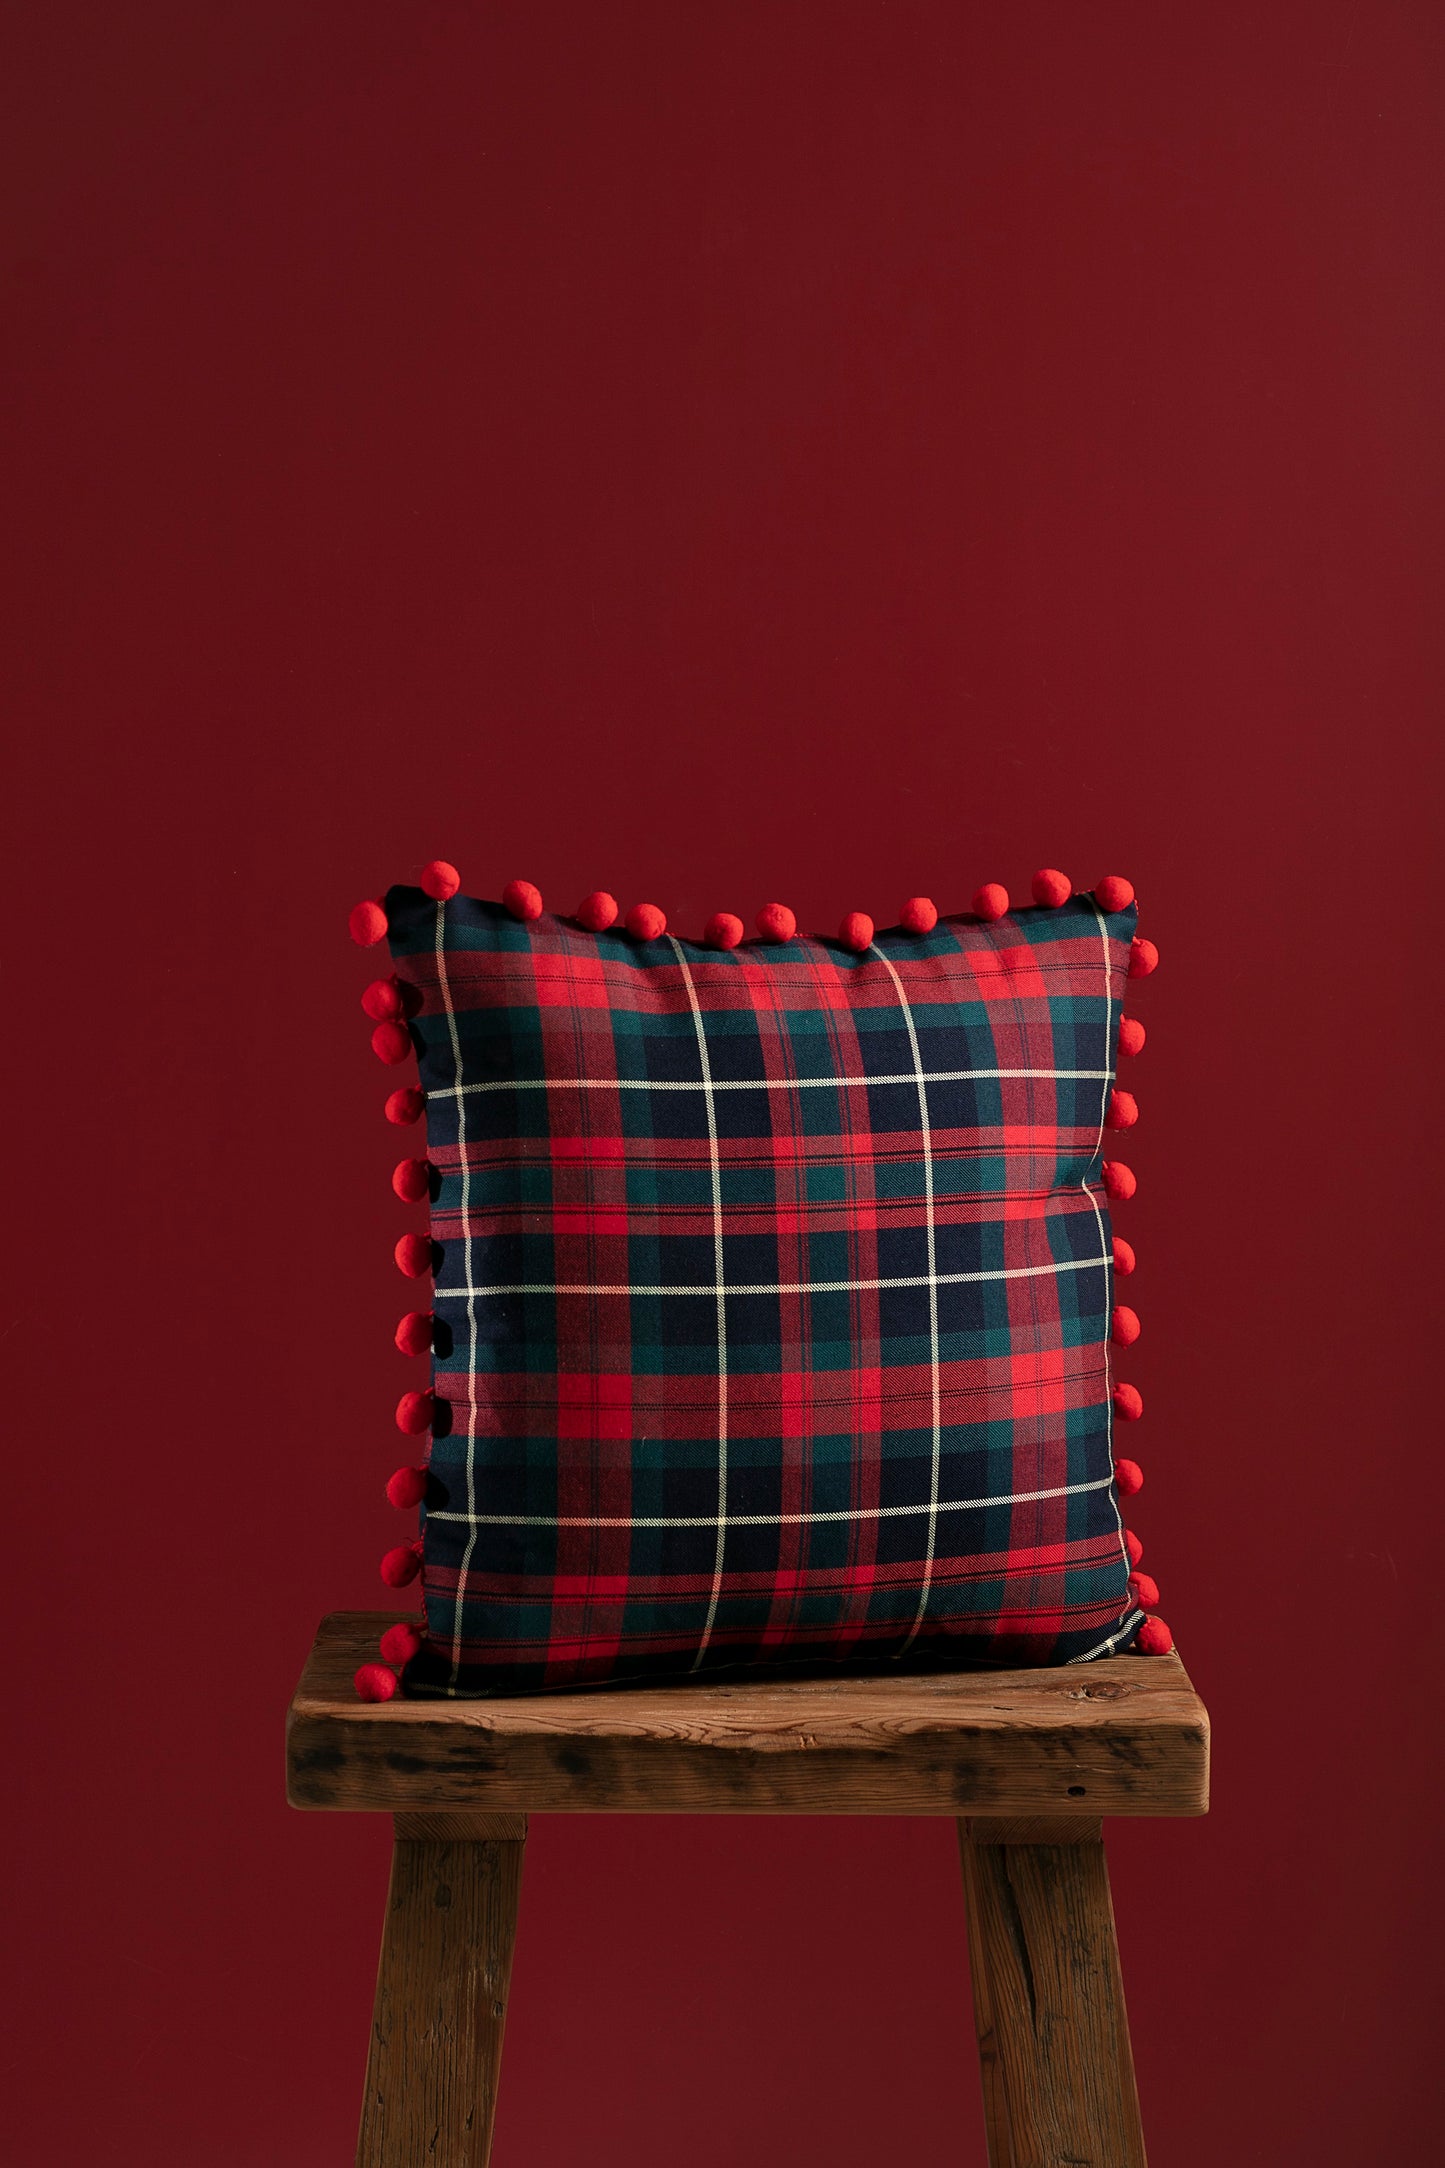 Christmas Themed Stylish Cushion Throw Pillow